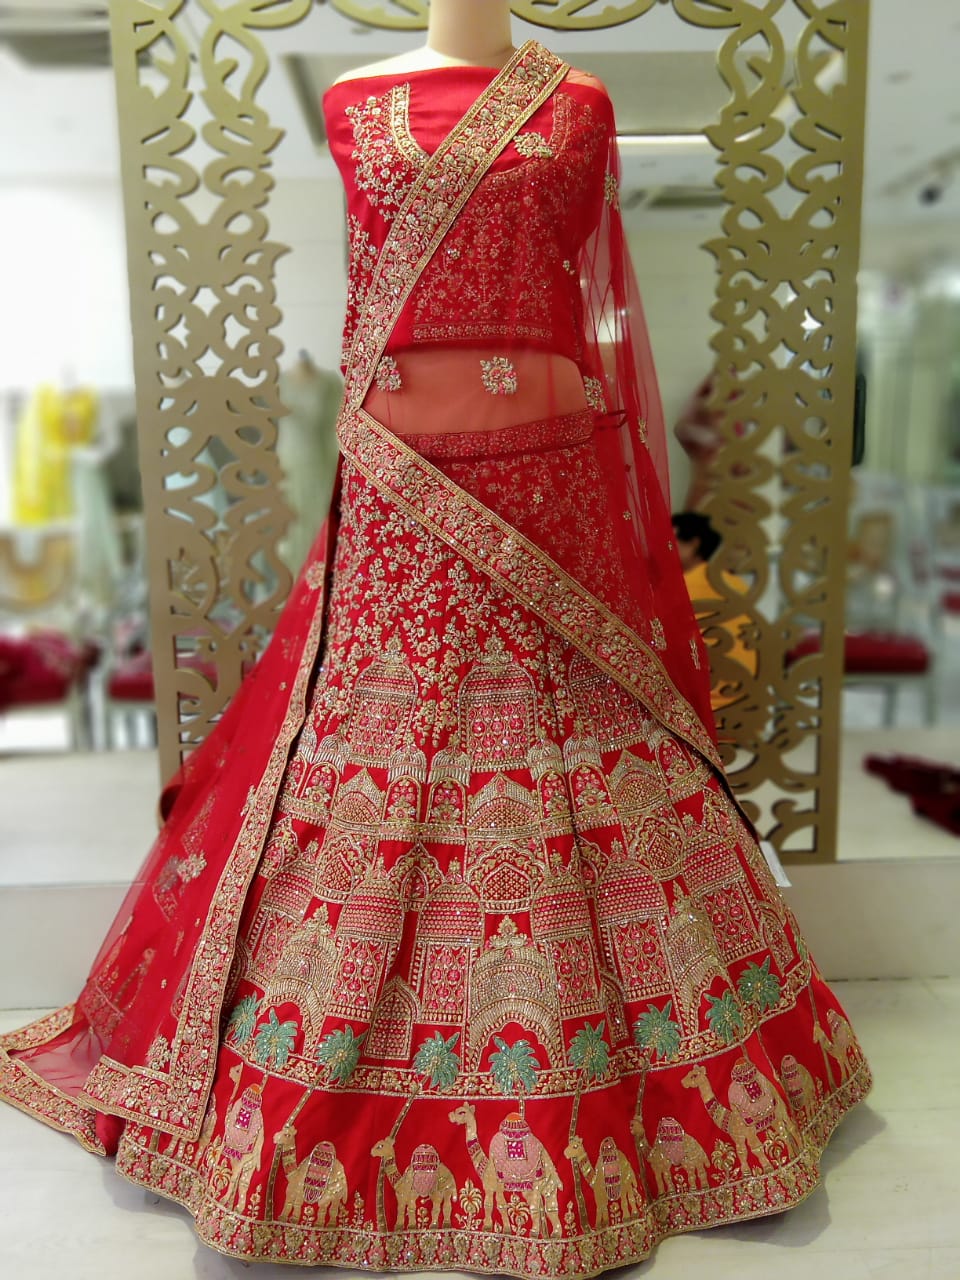 BRIDAL SAREE OR WEDDING LEHENGA: WHAT IS THE BEST FOR BRIDE? | by Suvidha  Fashion | Medium